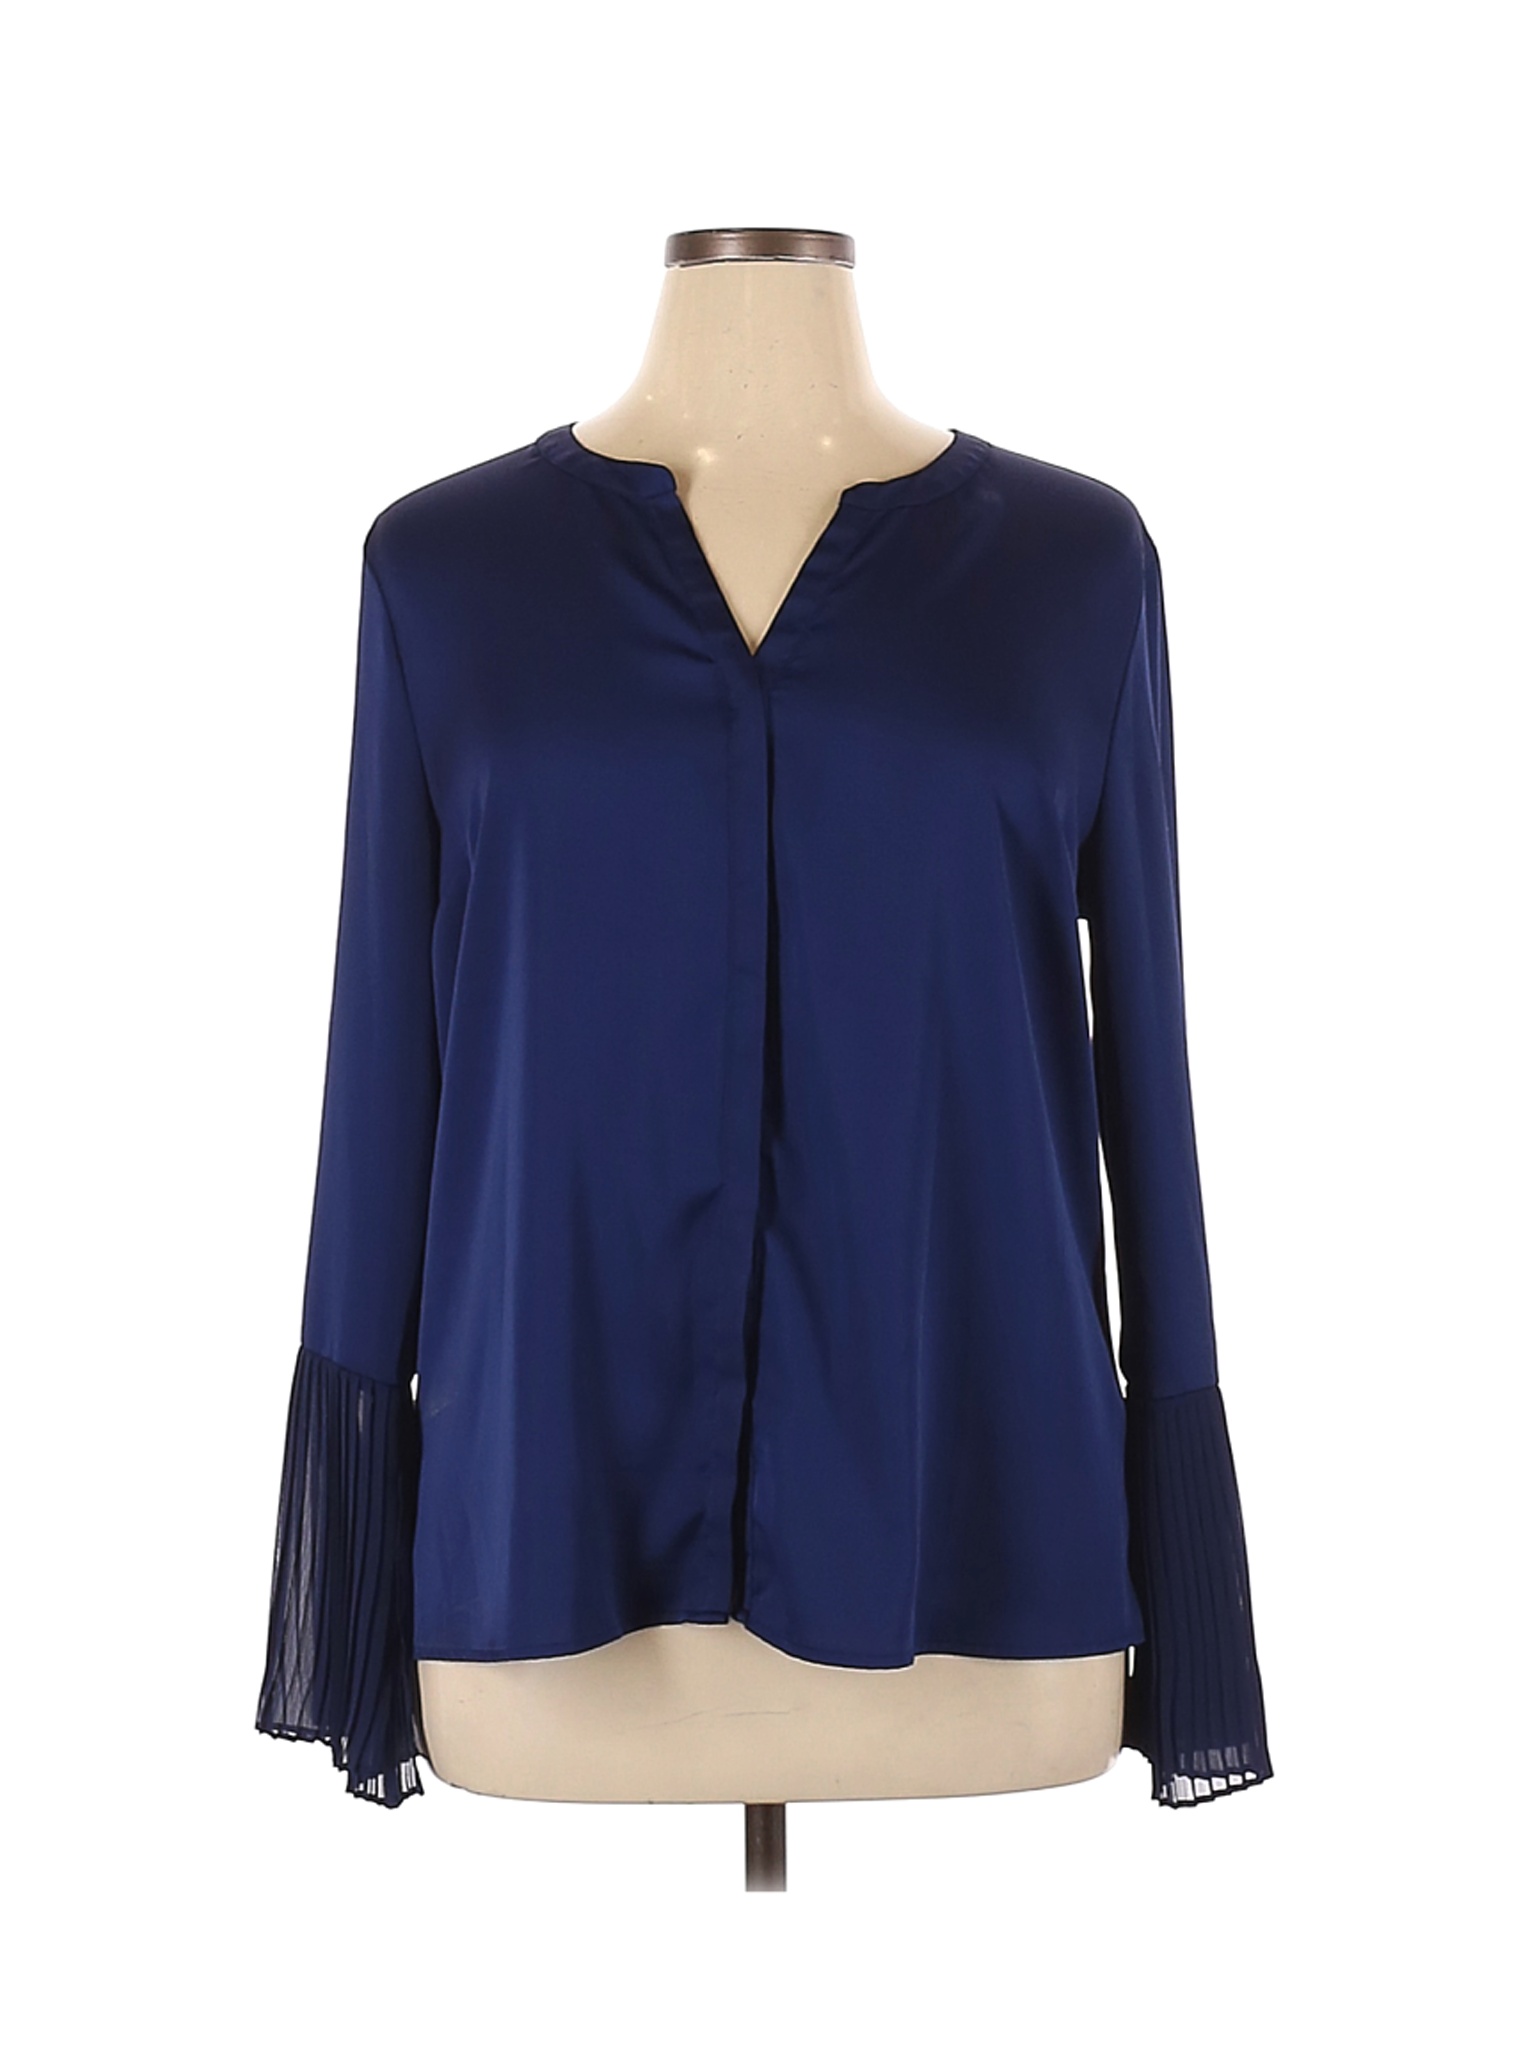 Worthington Women Blue Long Sleeve Blouse XL | eBay